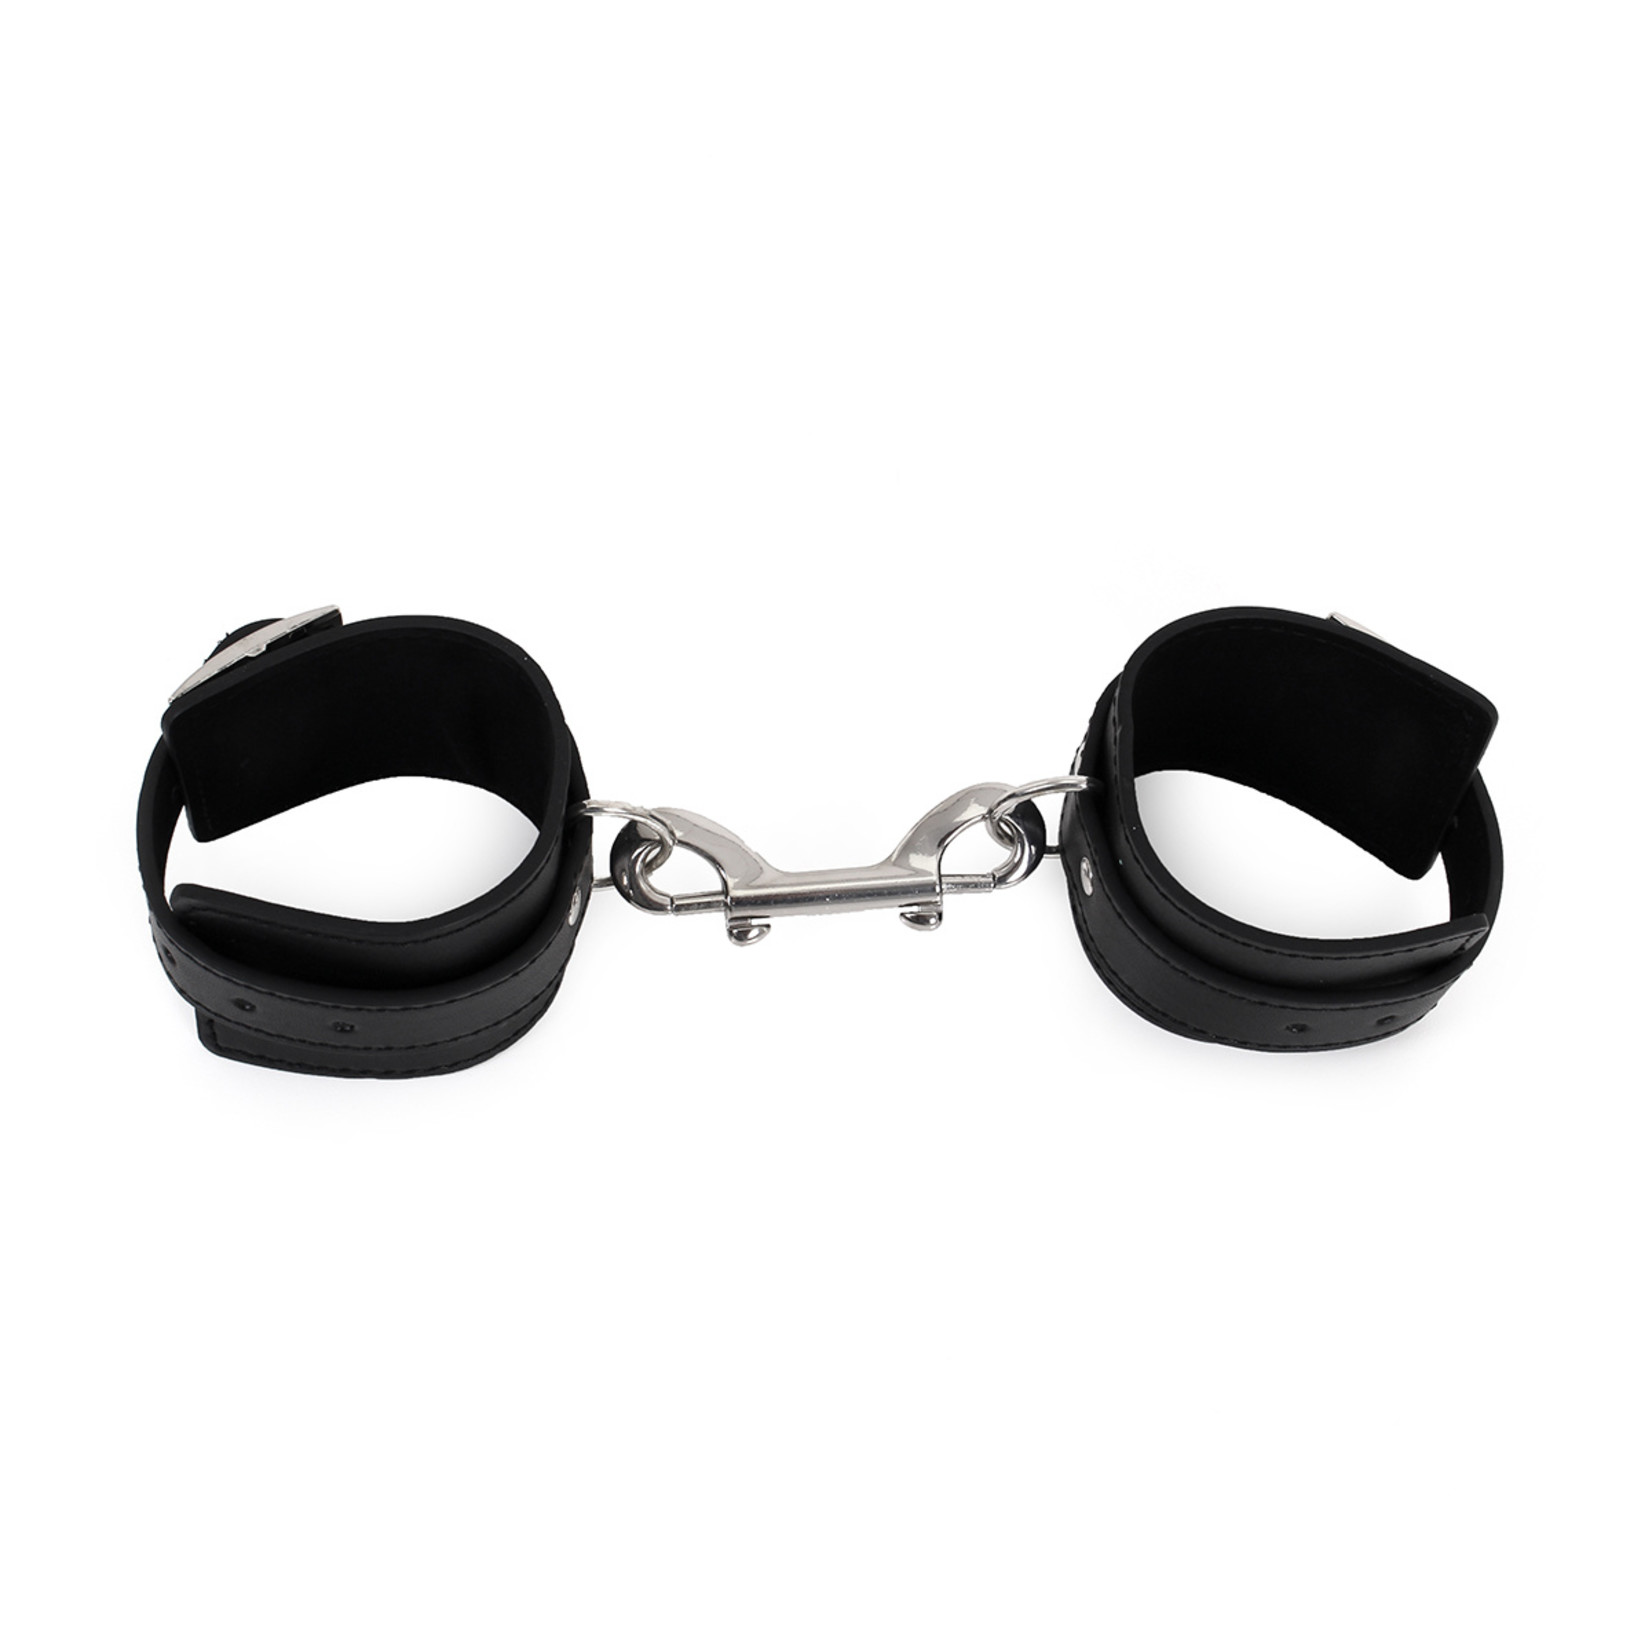 KIOTOS Leather Budget Wrist Cuffs met Double Hook